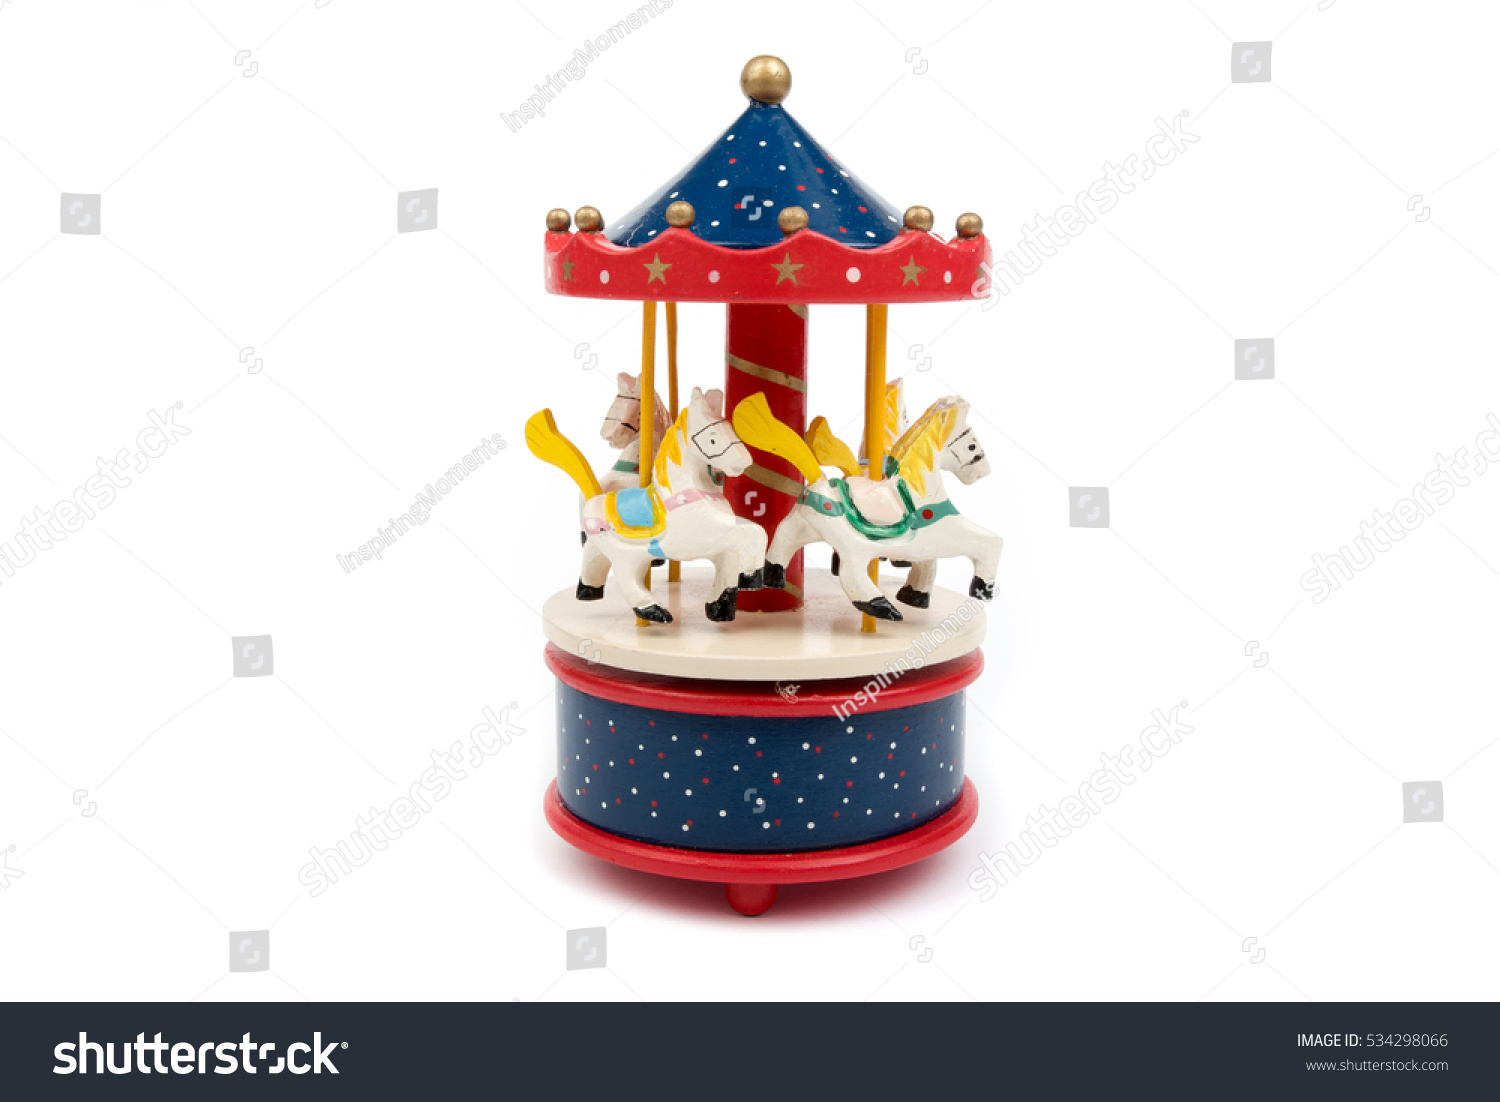 musical merry go round toy